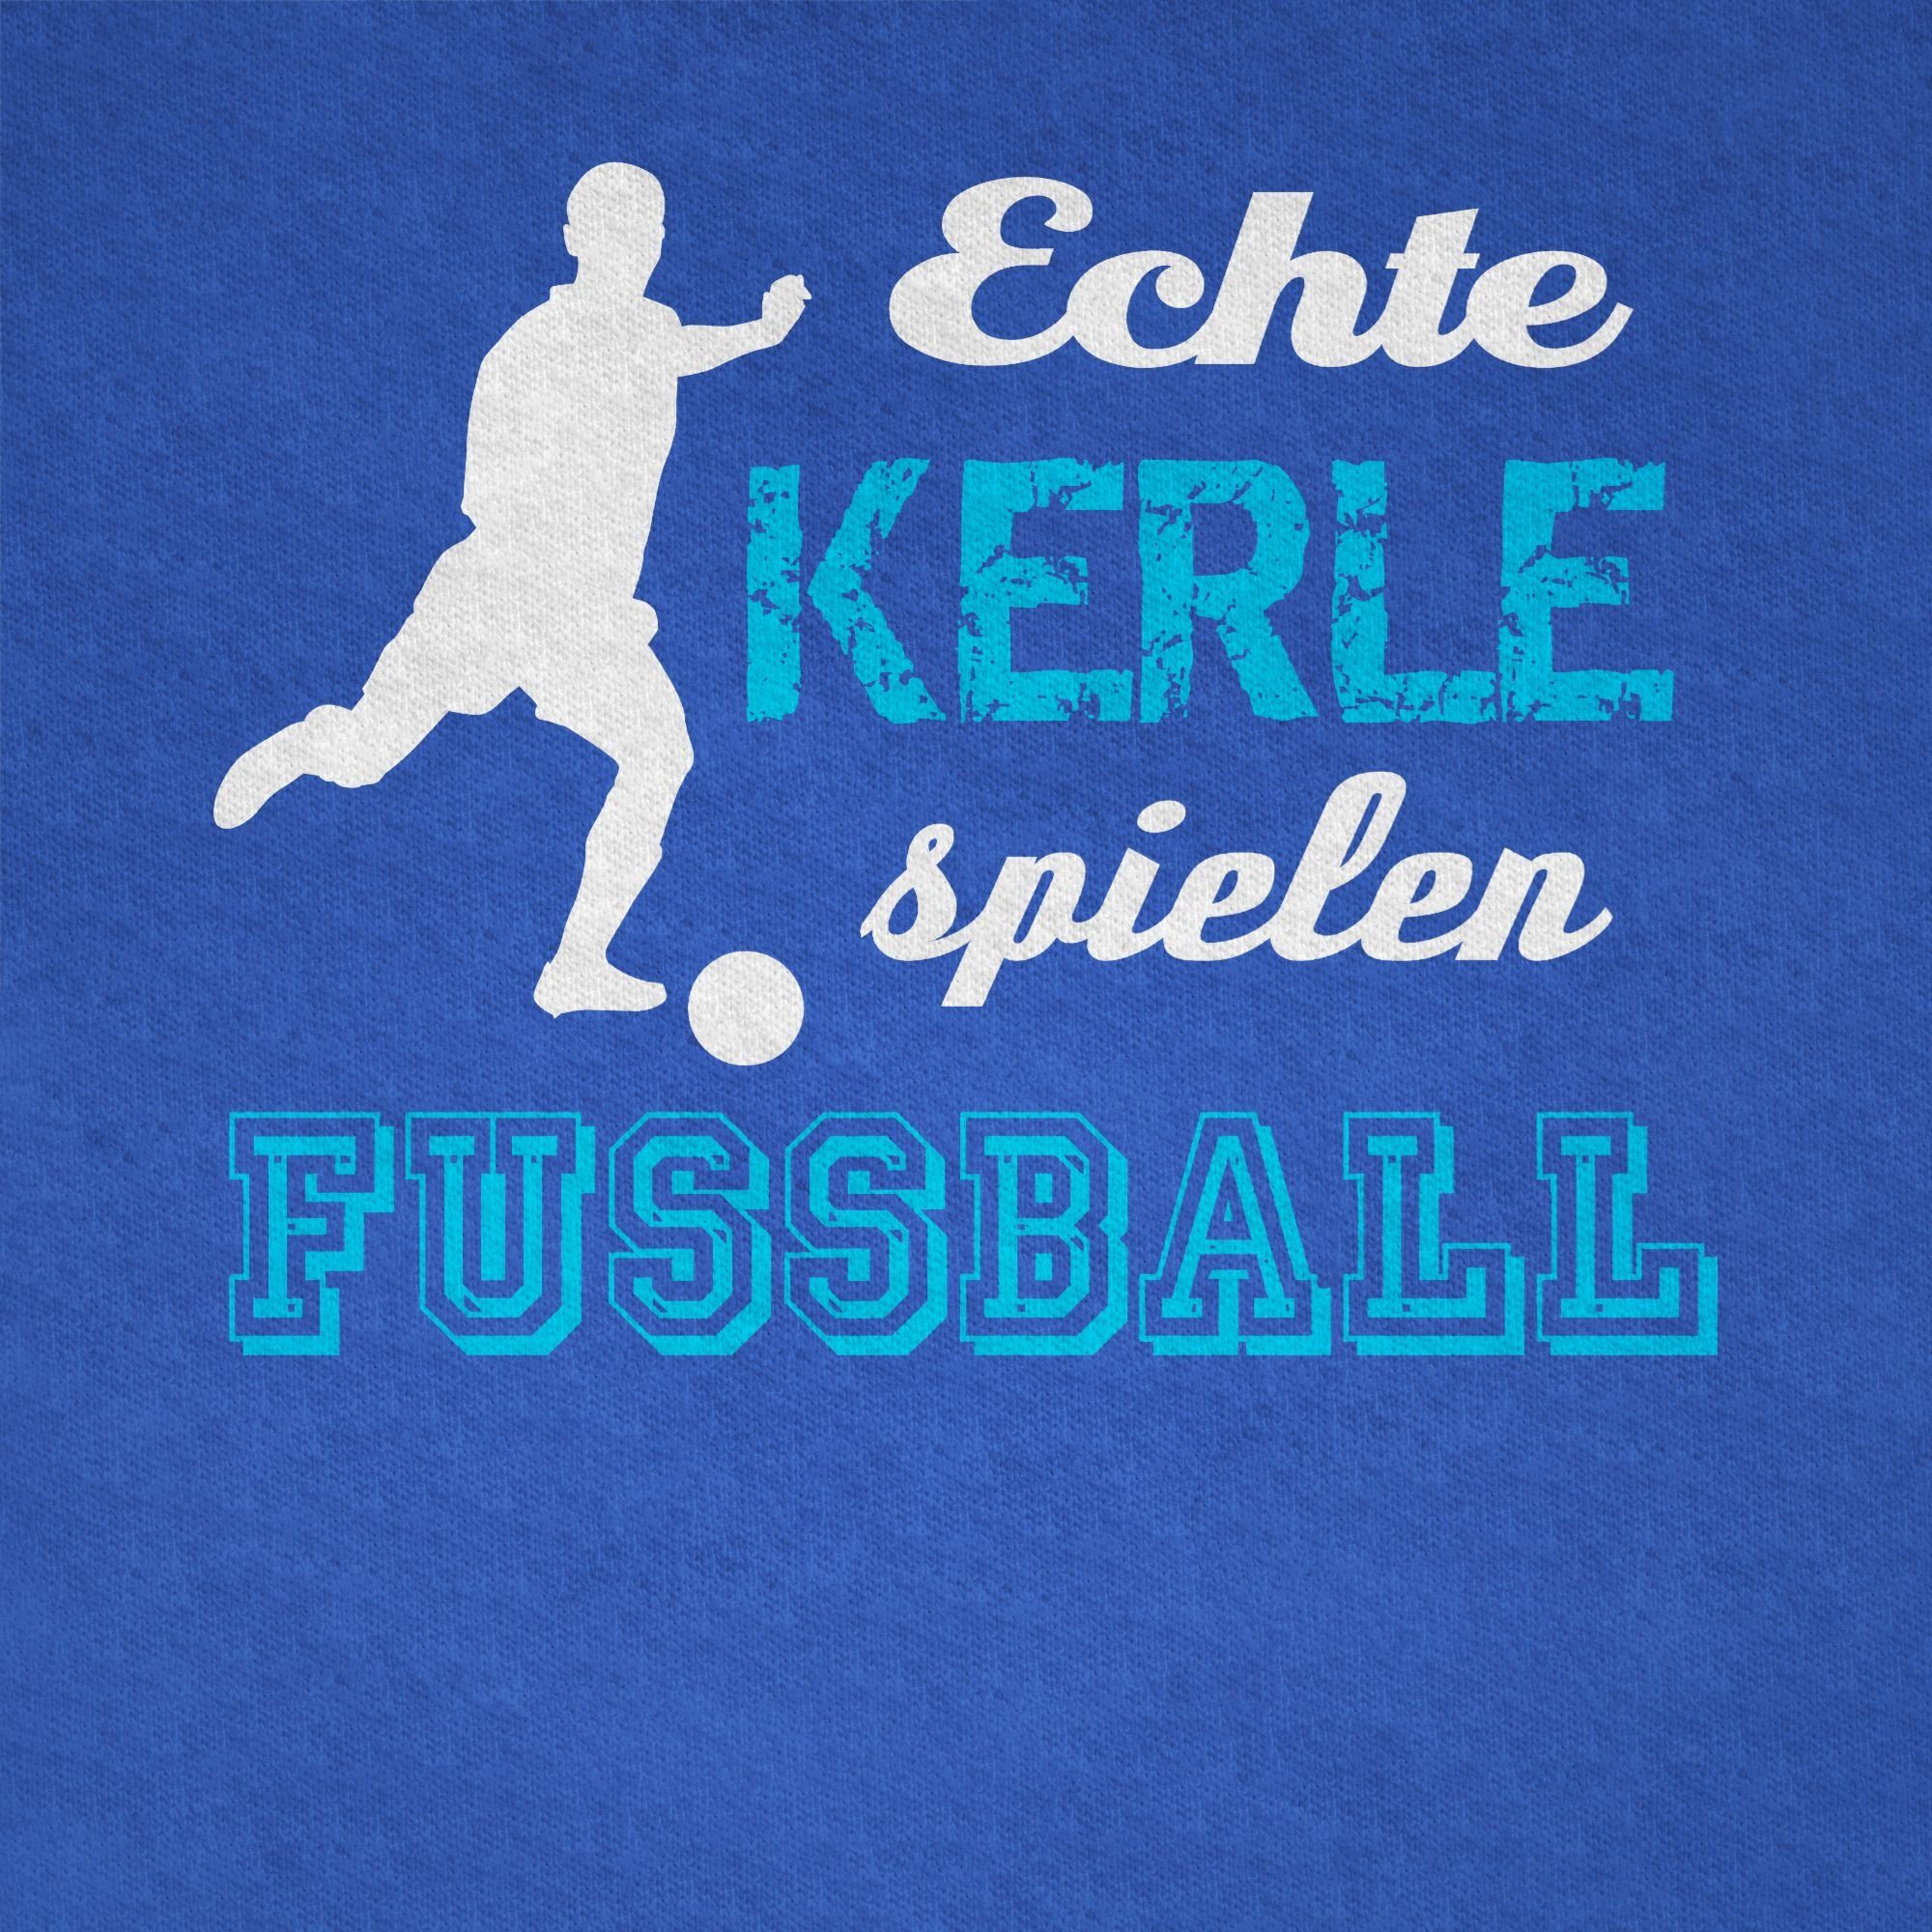 Shirtracer T-Shirt Echte Kerle spielen Sport Royalblau Fußball Kinder Kleidung 2